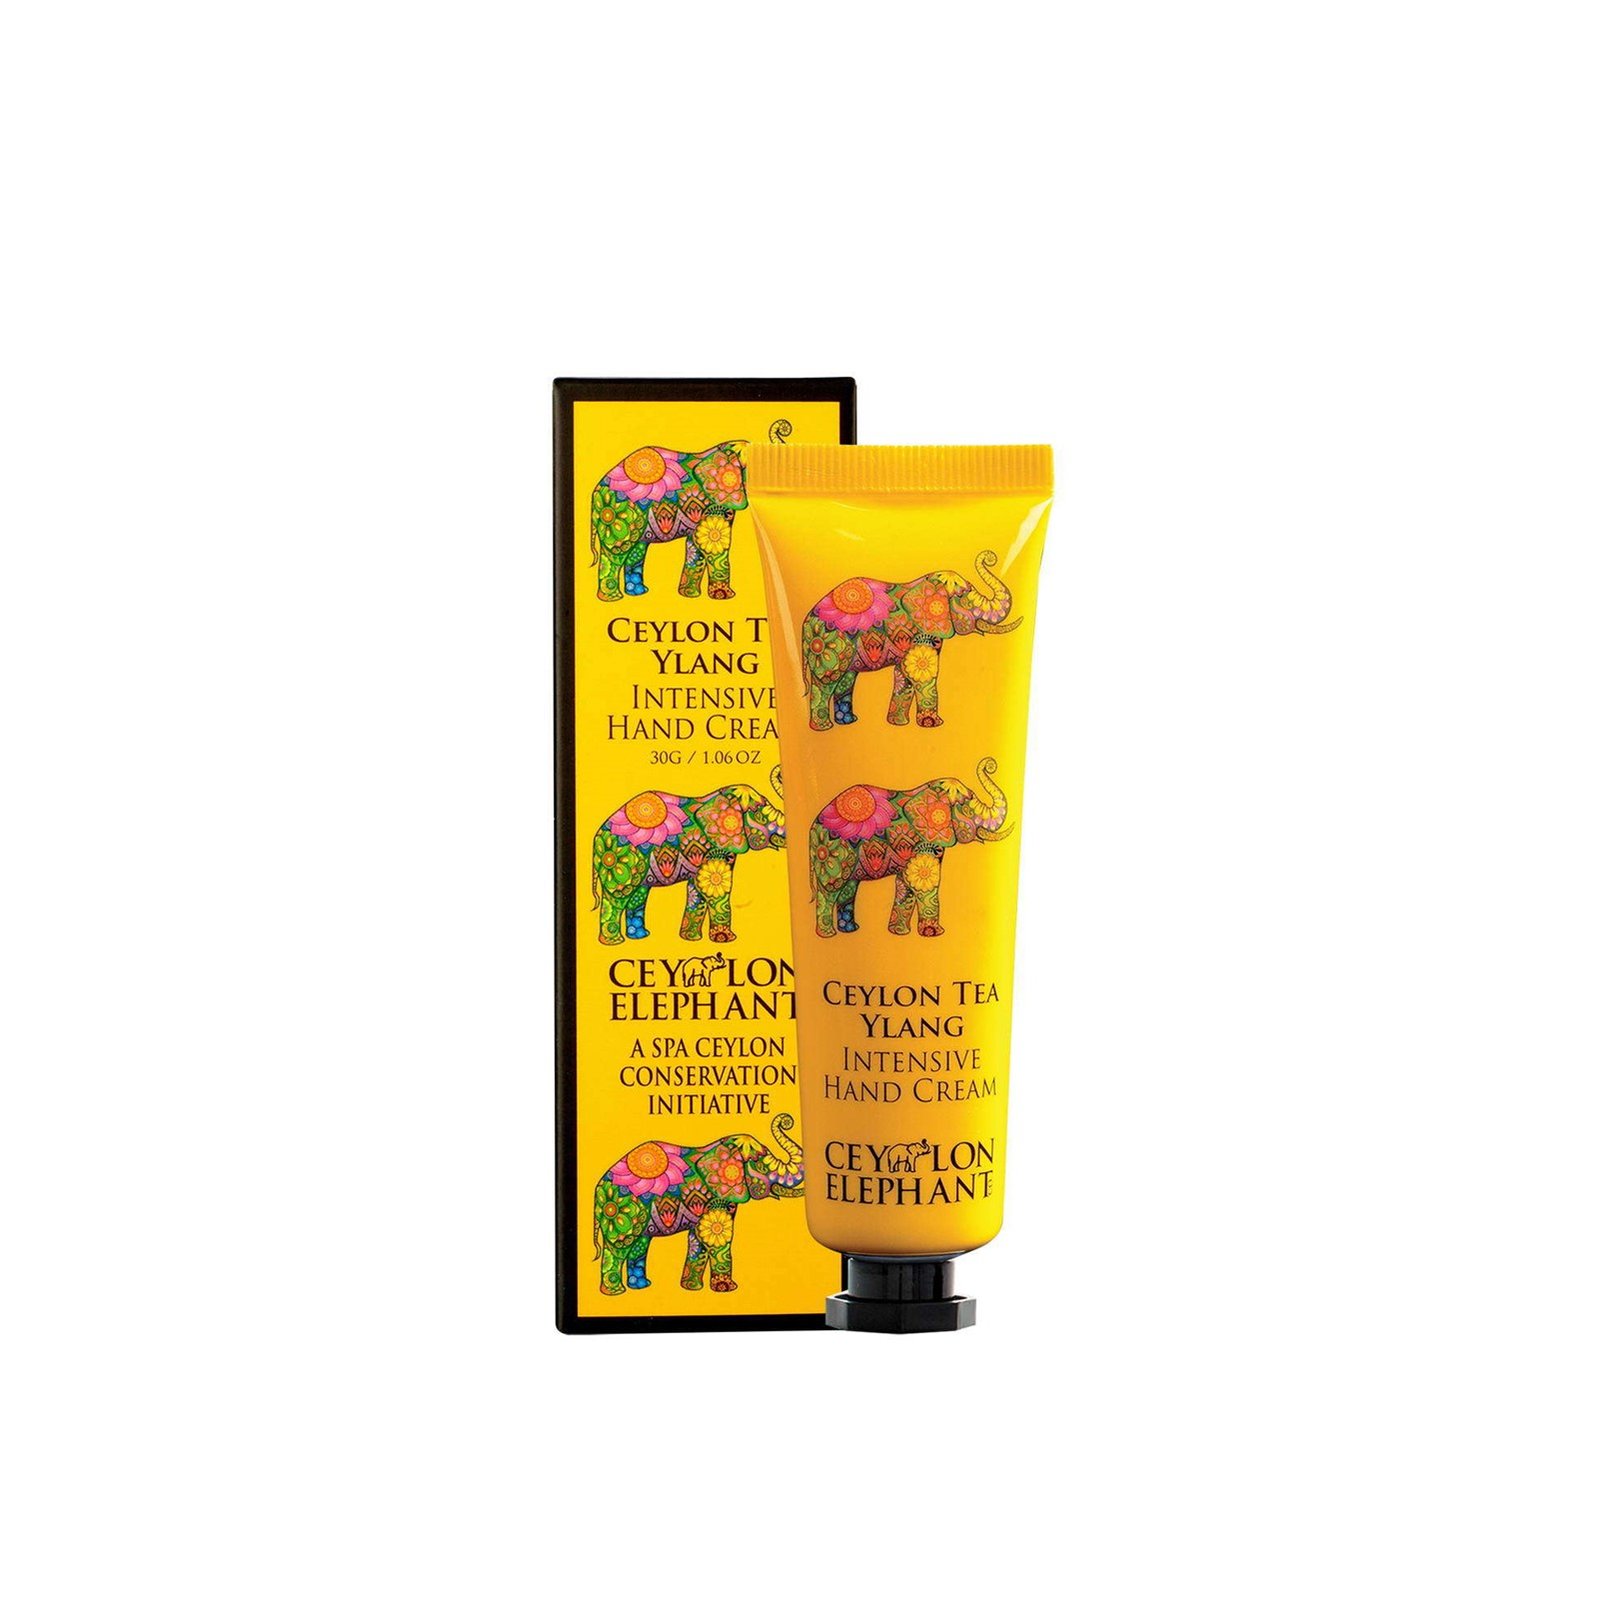 Spa Ceylon Elephant Ceylon Tea Ylang Intensive Hand Cream 30g (1.06 oz)